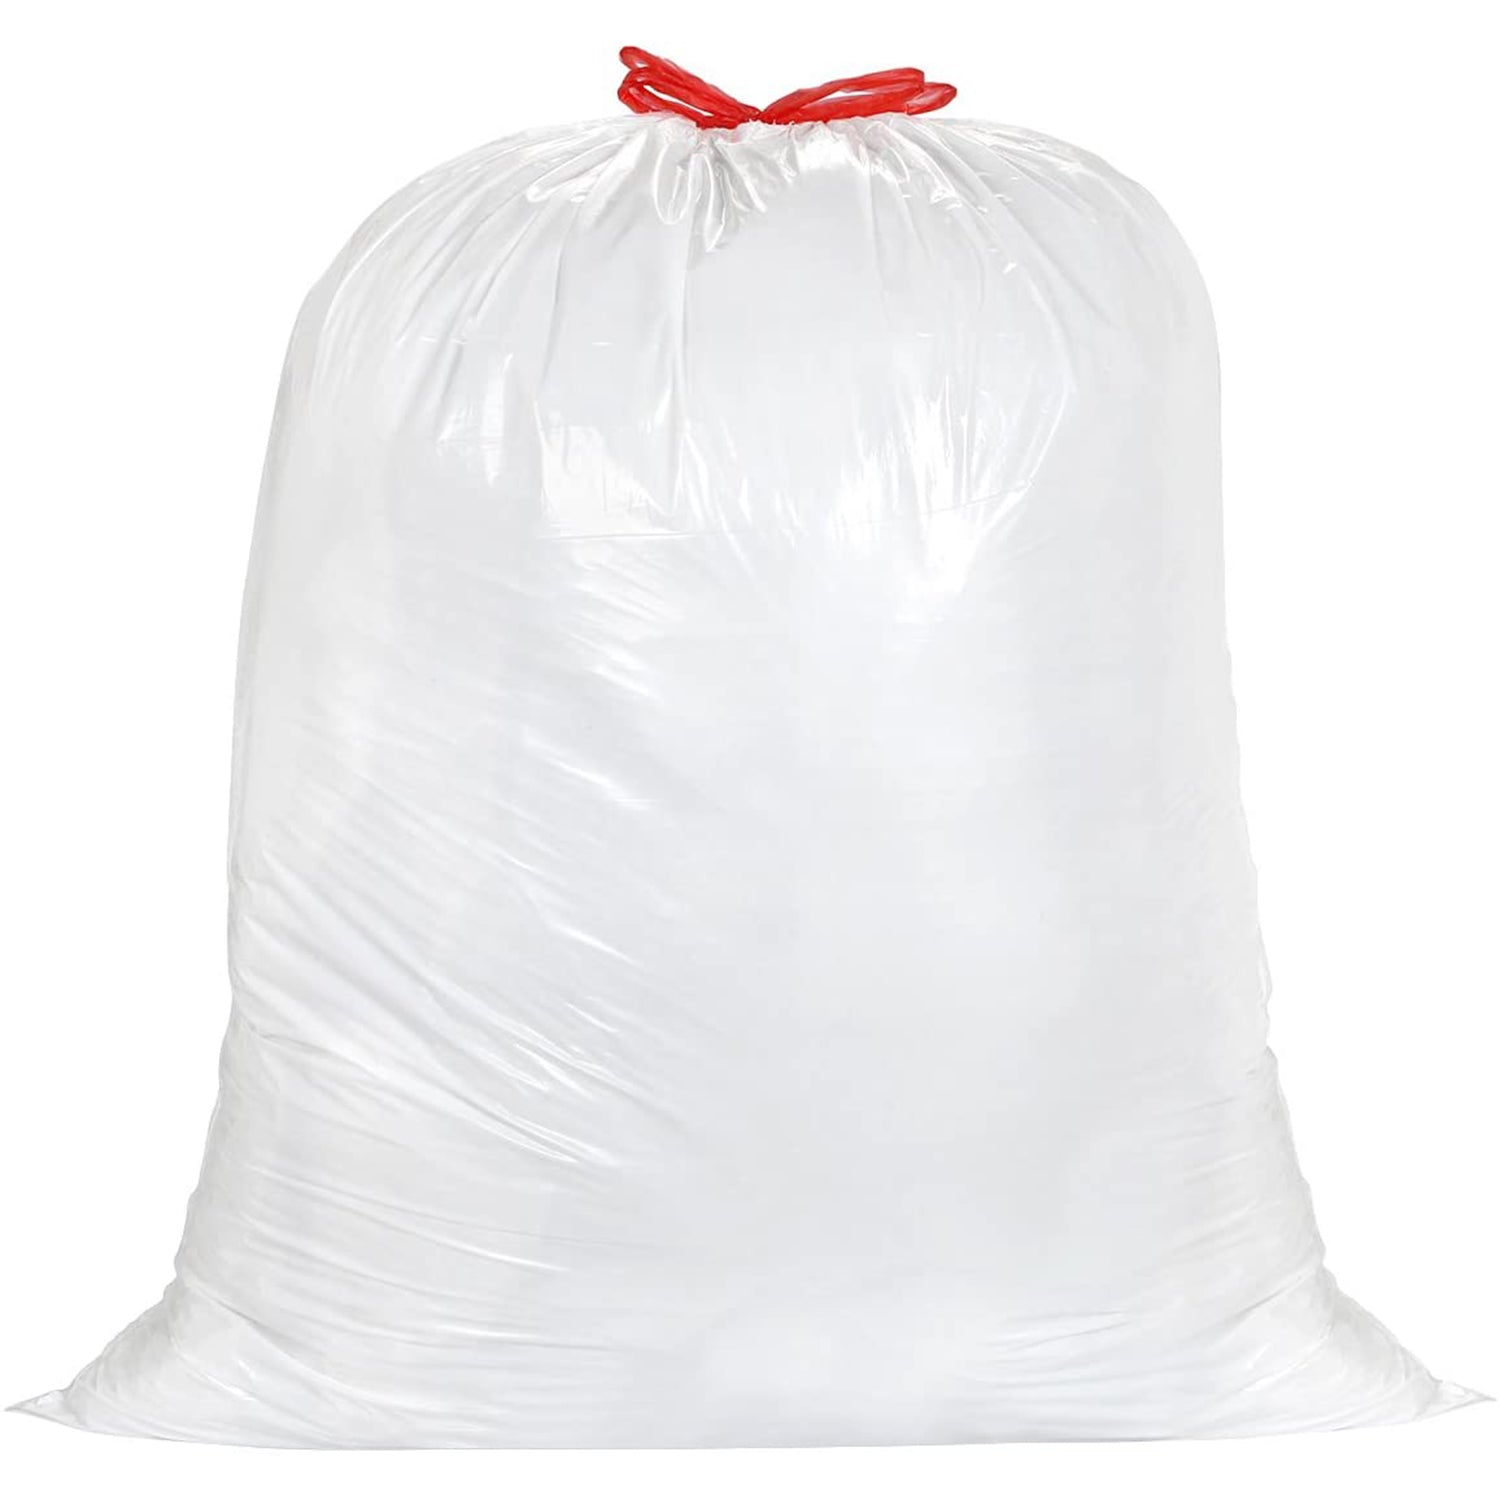 Nicole Home Collection Kitchen Drawstring Trash Bags, 13 Gallon, White, 60 ct